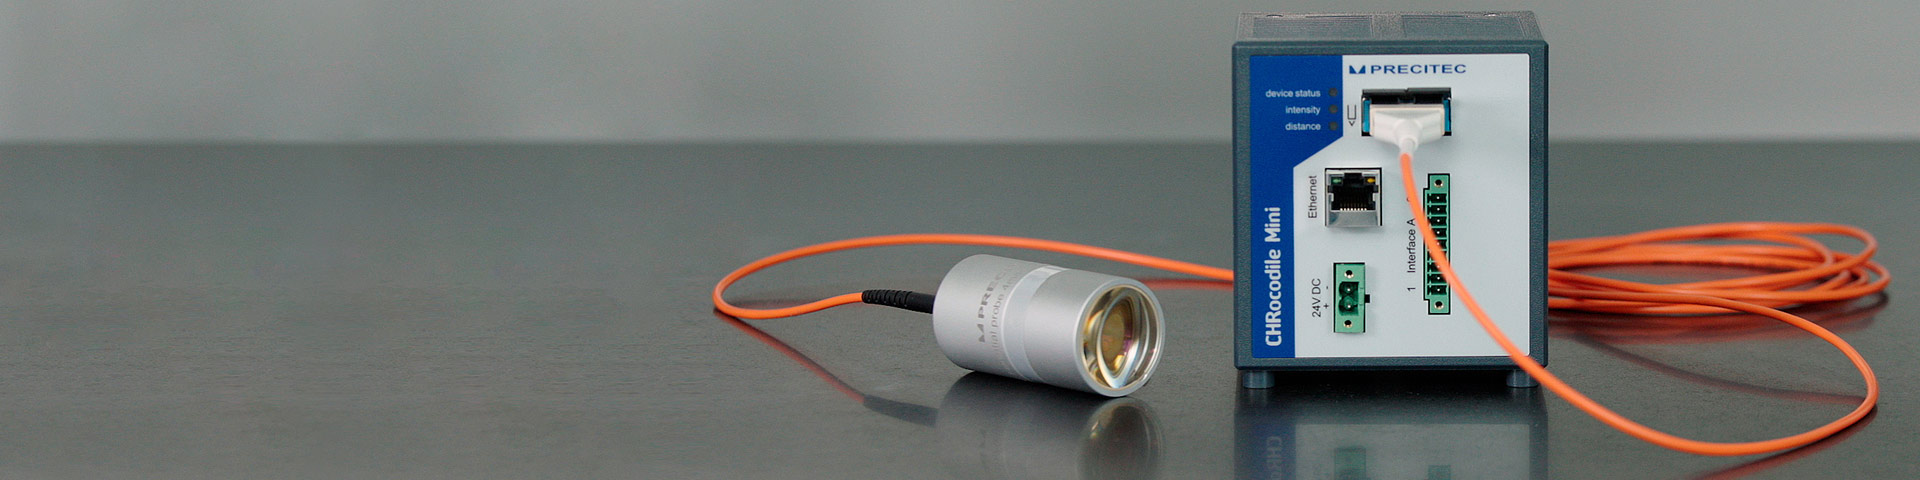 CHRocodile Mini chromatisch konfokaler Sensor und Messkopf